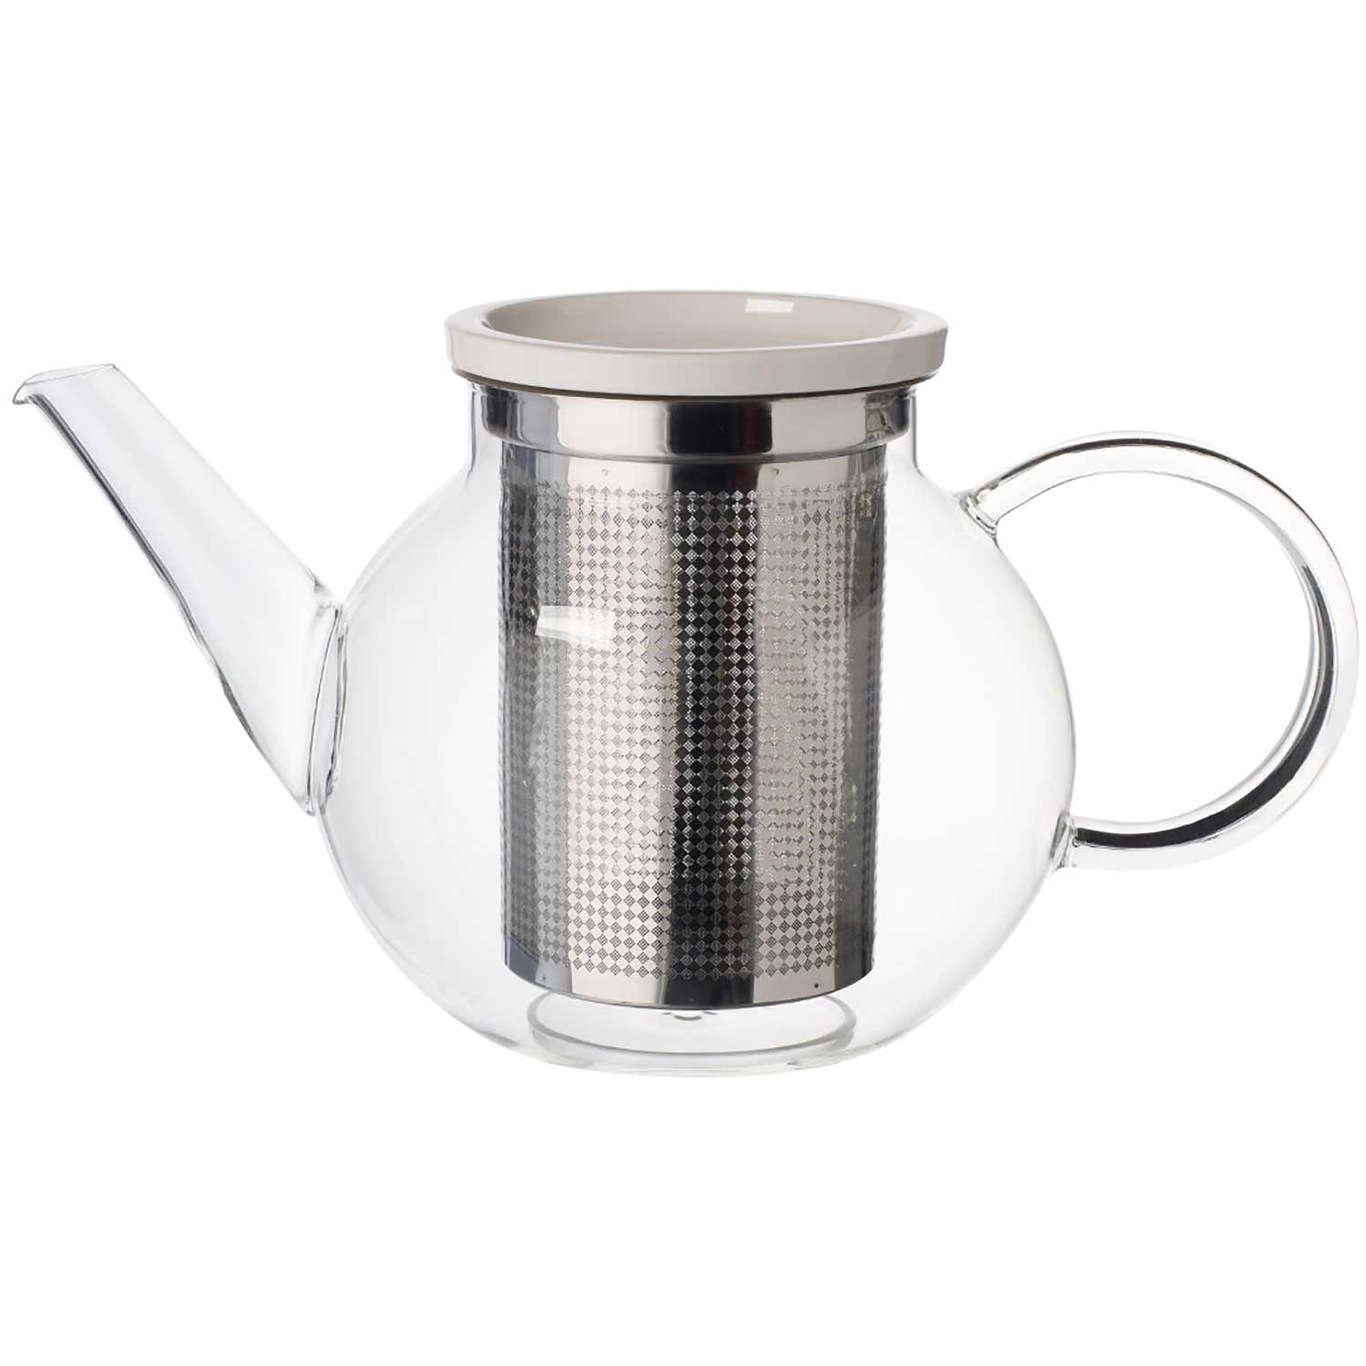 Artesano Hot & Cold Beverage Teapot, 1 L